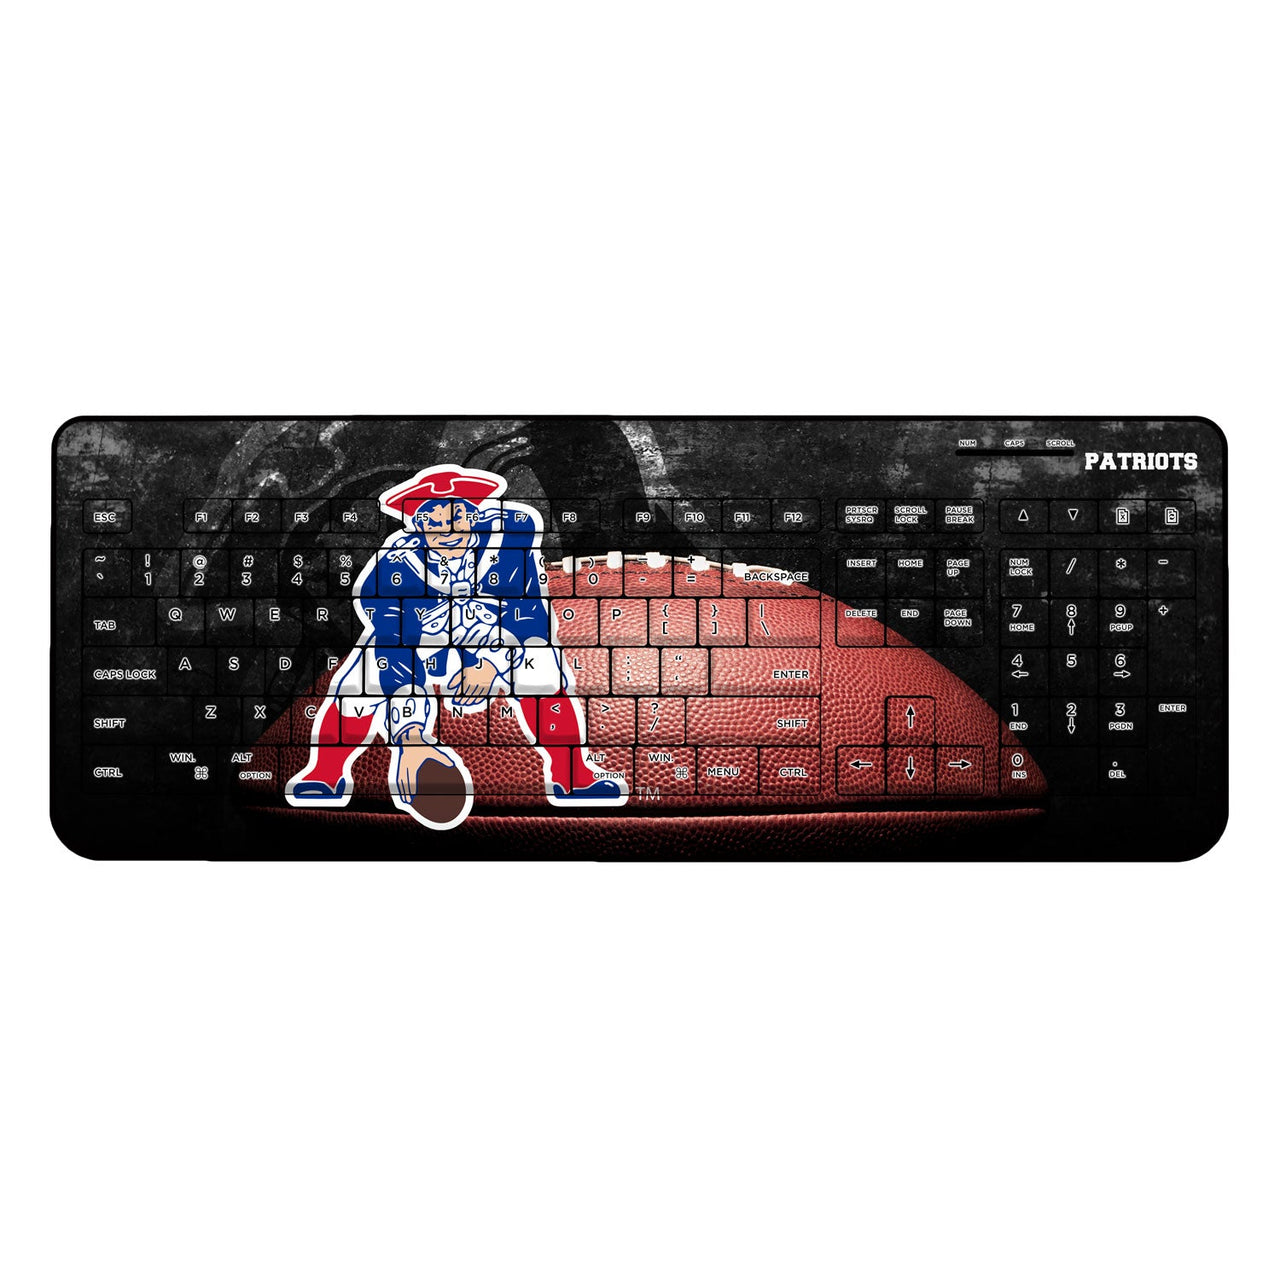 New England Patriots Legendary Wireless USB Keyboard-0